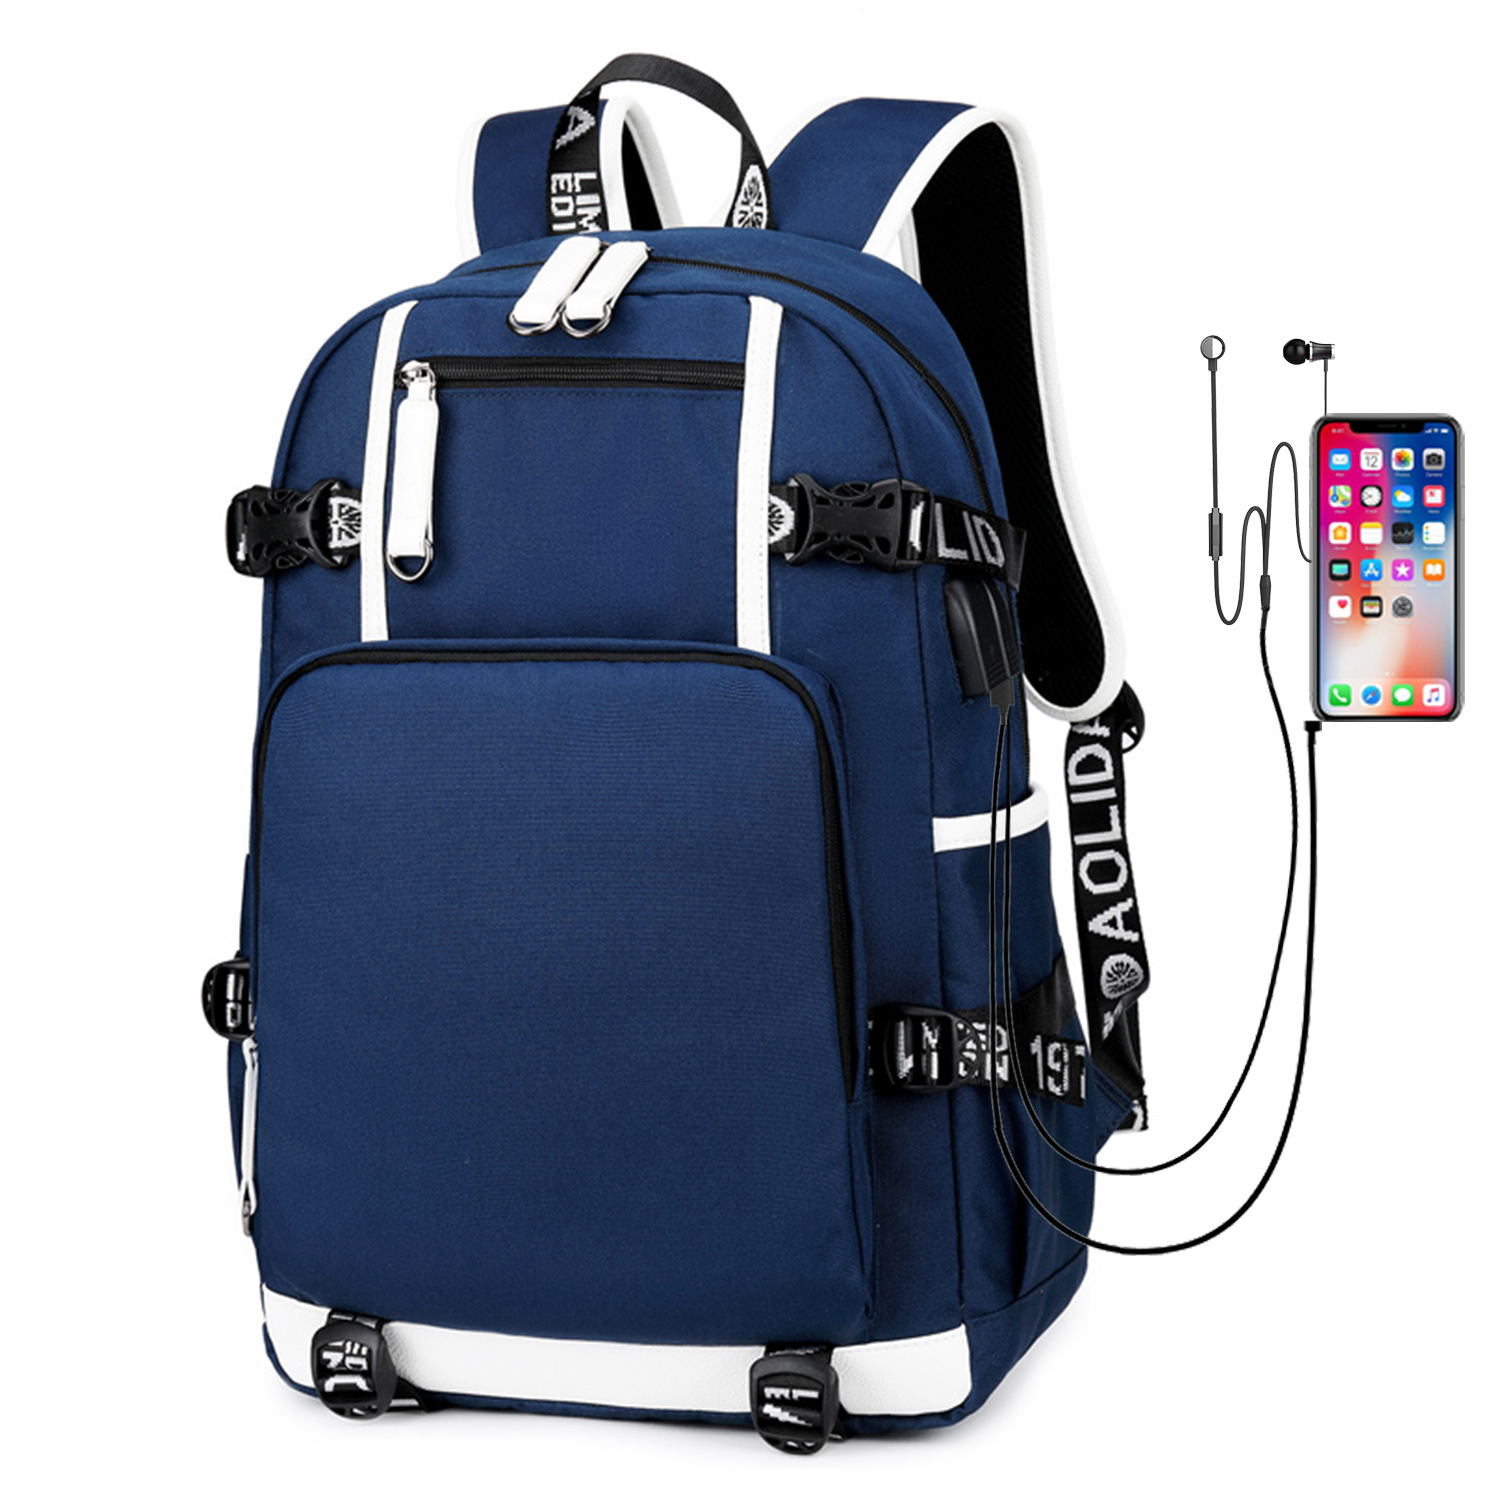 New Heat Mark Backpack Male Middle School Student Schoolbag Female Oxford Waterproof Computer Bag Leisure Travel Backpack Male Bag